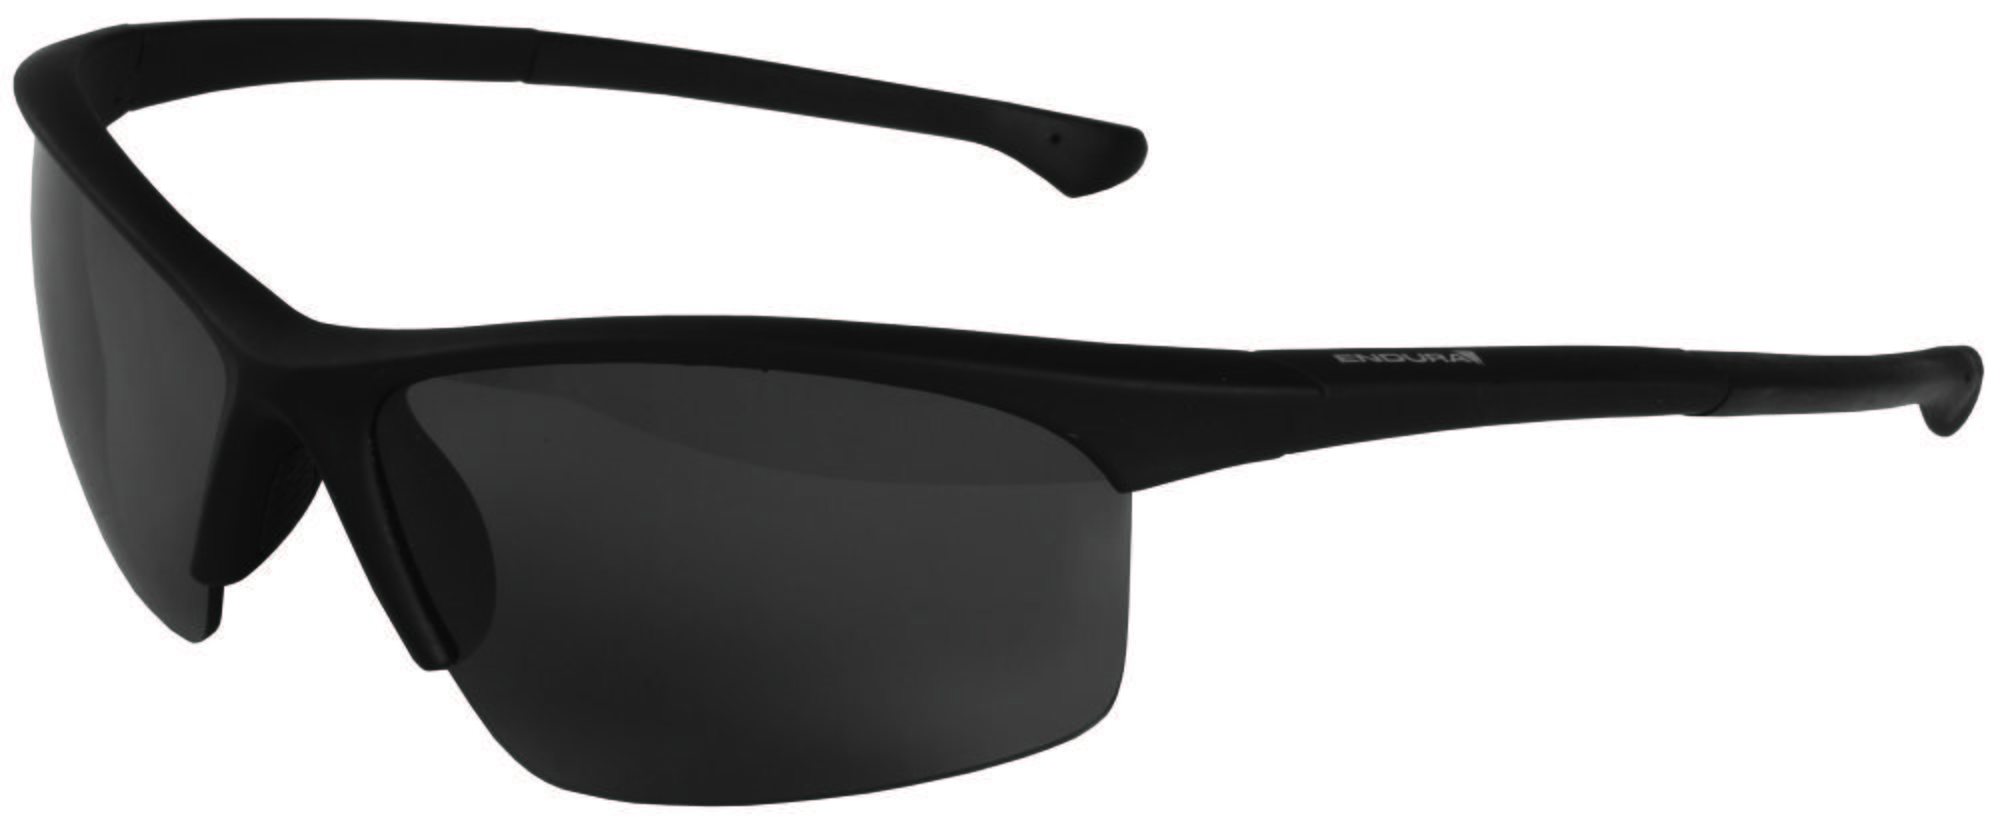 Endura Stingray Glasses - 4 Lens  Black